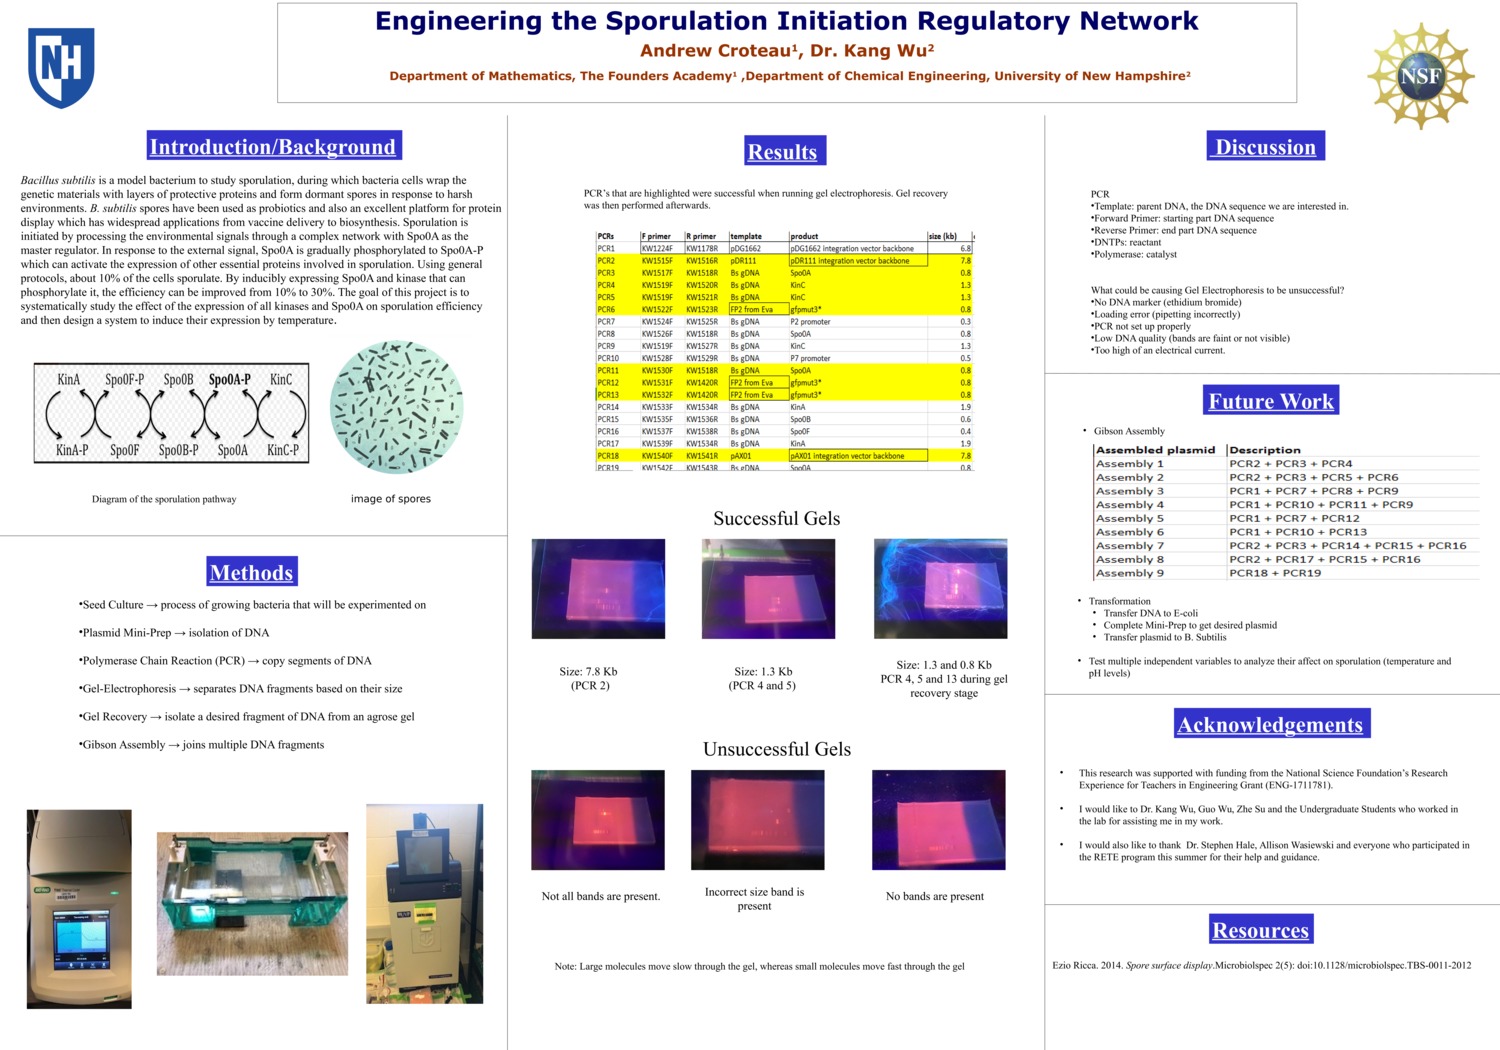 Engineering The Sporulation Initiation Regulatory Network by atg28